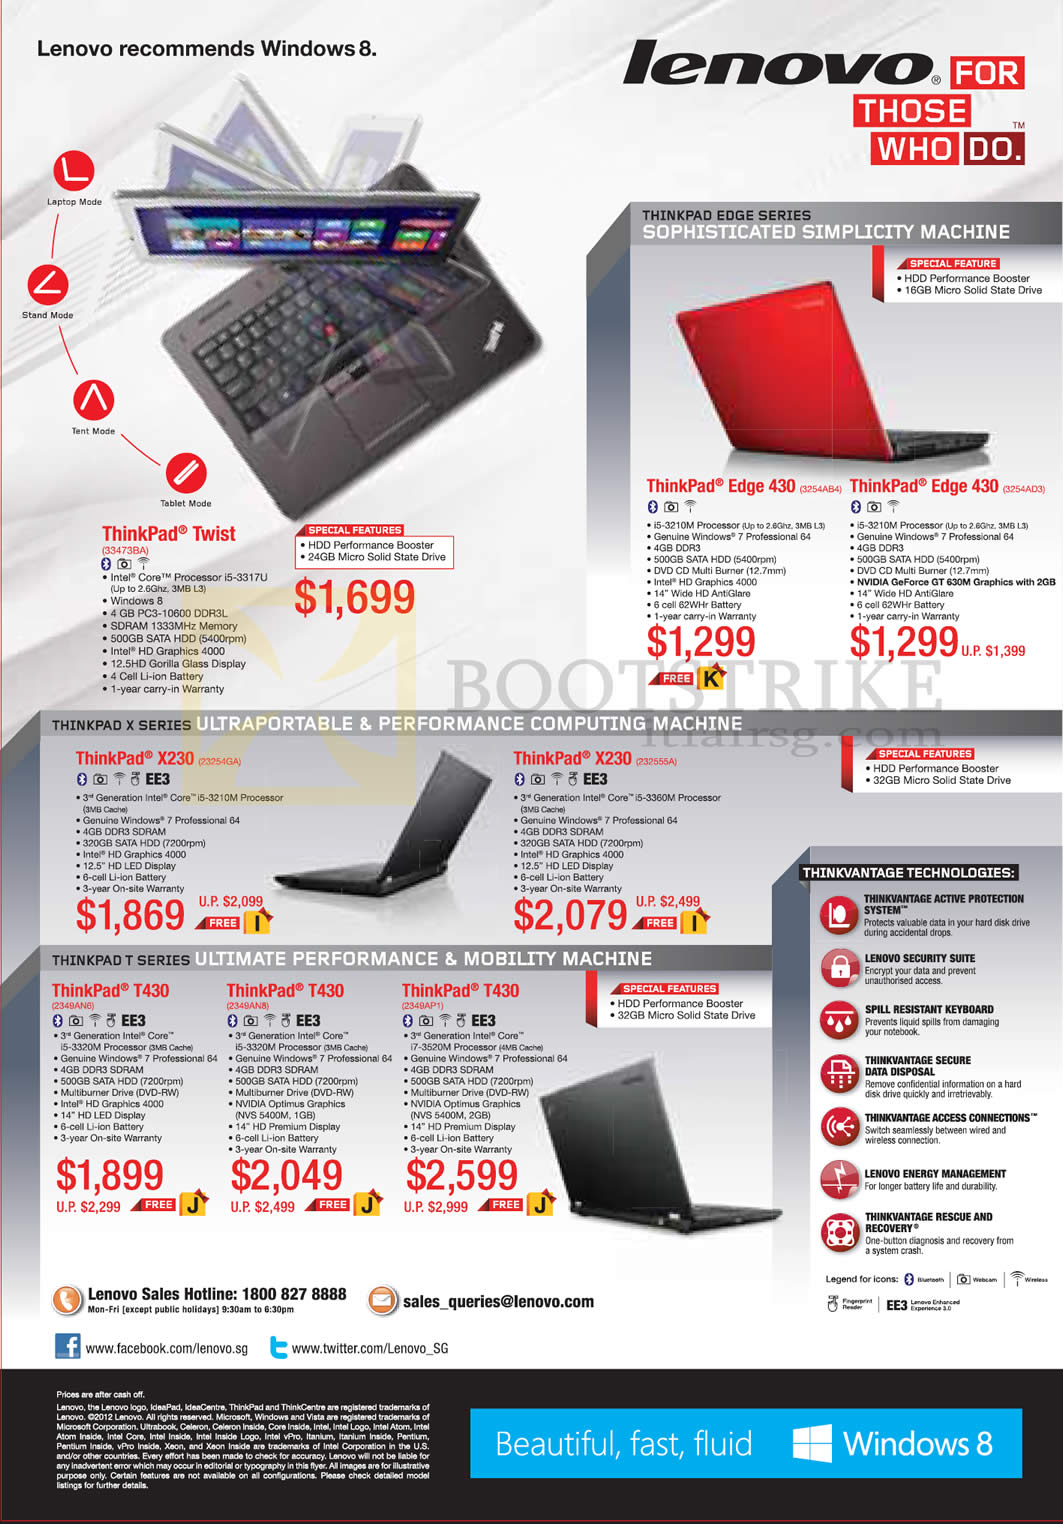 SITEX 2012 price list image brochure of Lenovo Notebooks Twist, Edge 430, X230, T430